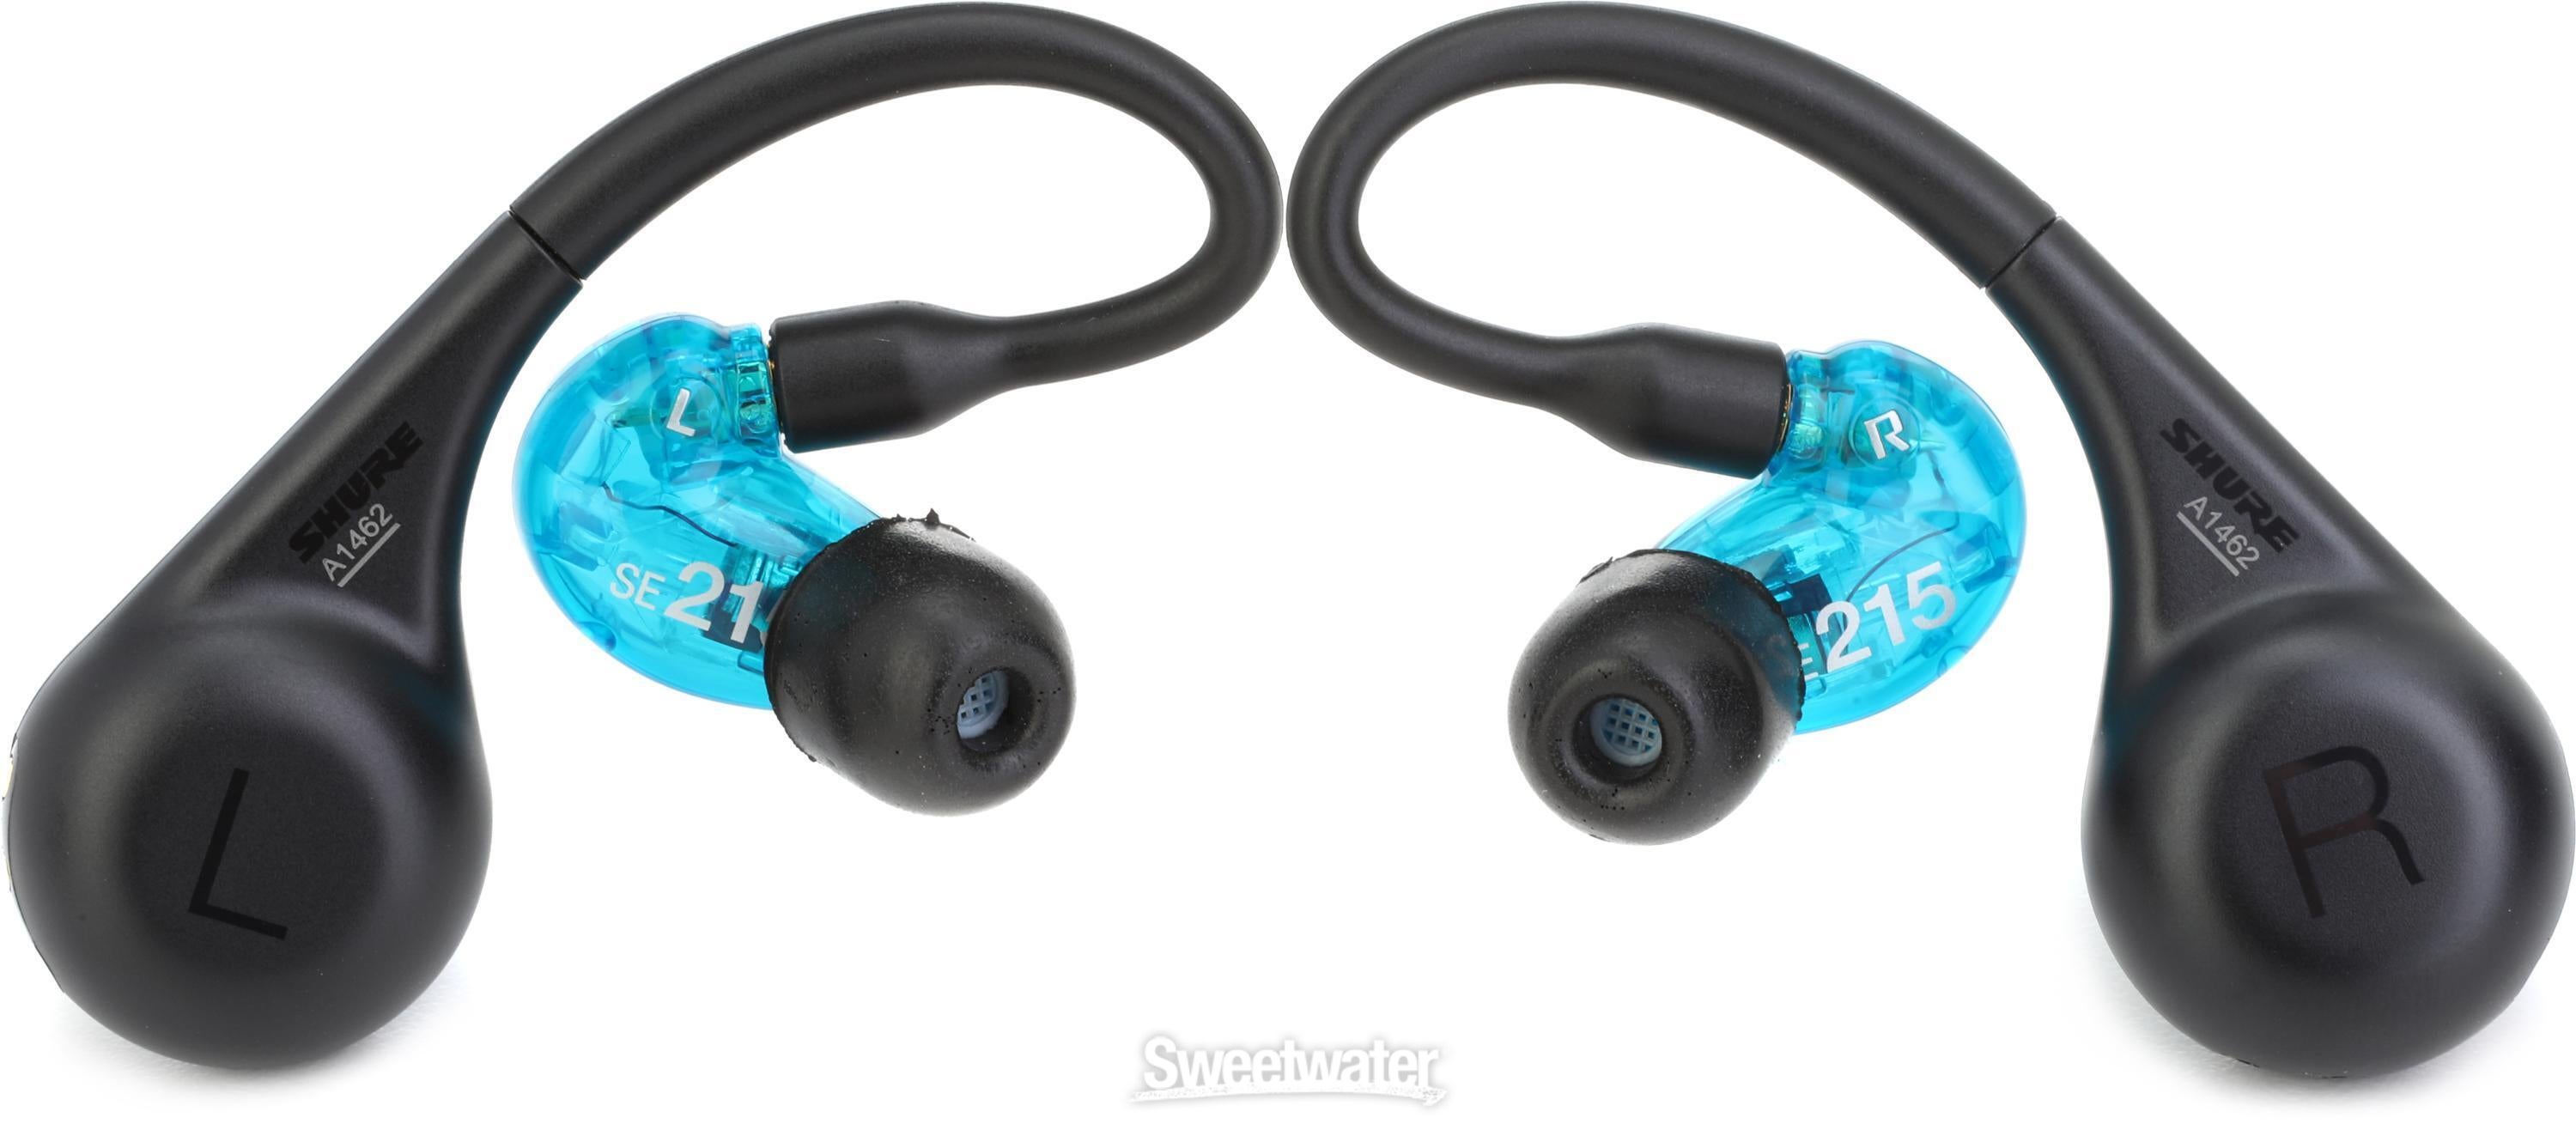 Shure Aonic 215 True Wireless Earphones with Bluetooth - Blue